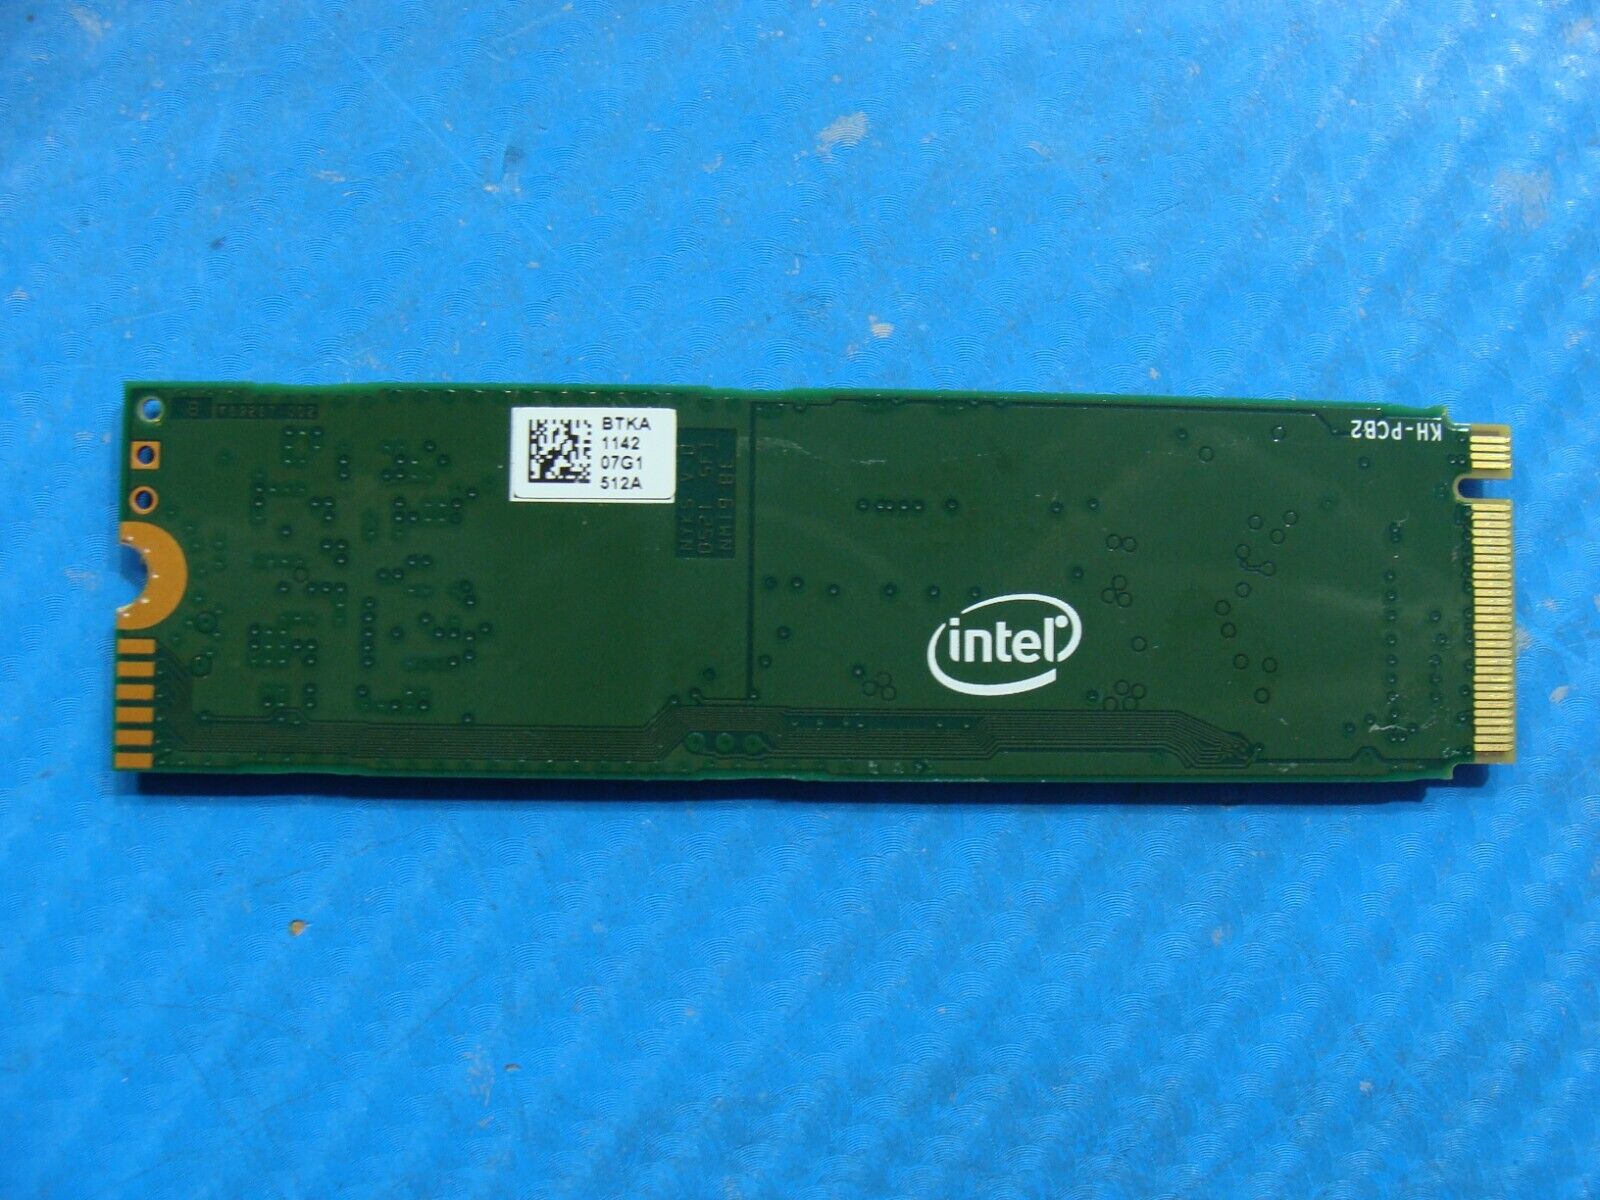 Asus G513QY-212.SG15 Intel 512GB NVMe M.2 SSD SSDPEKNU512GZ